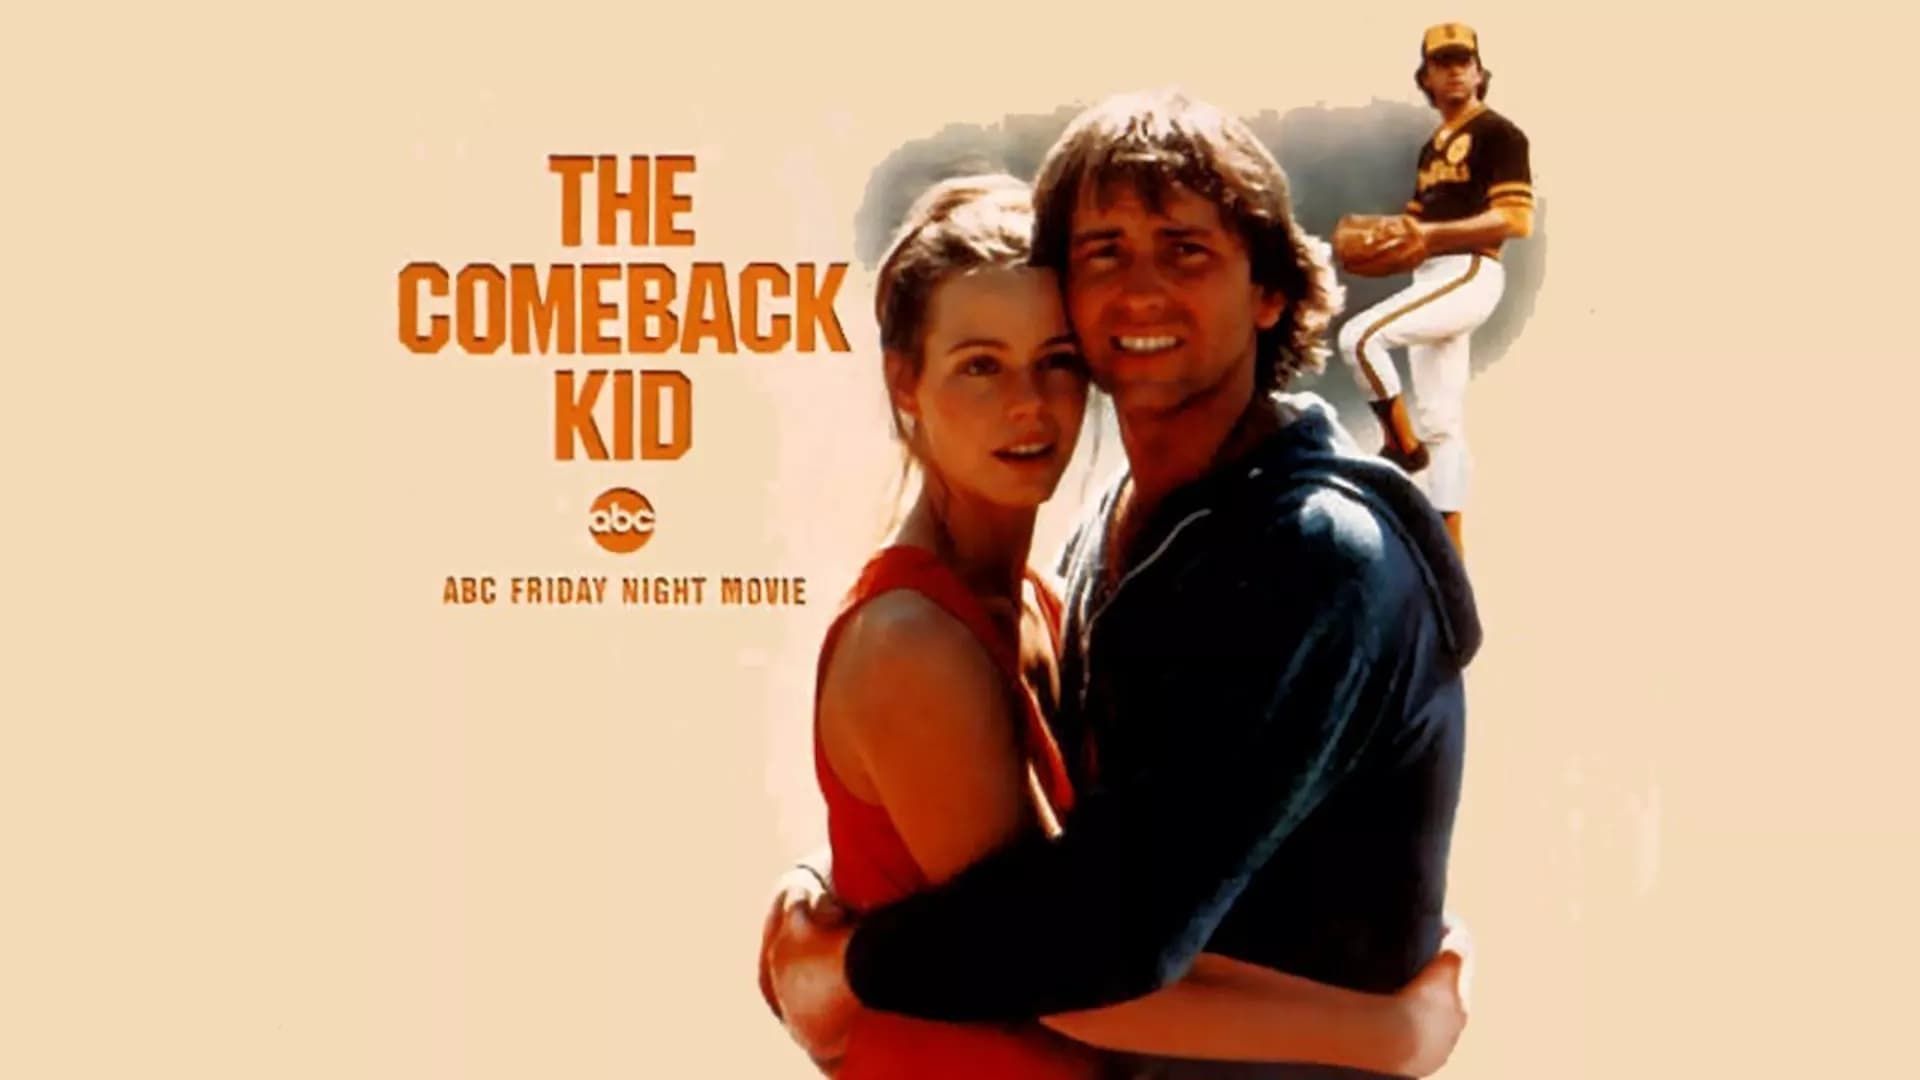 The Comeback Kid background